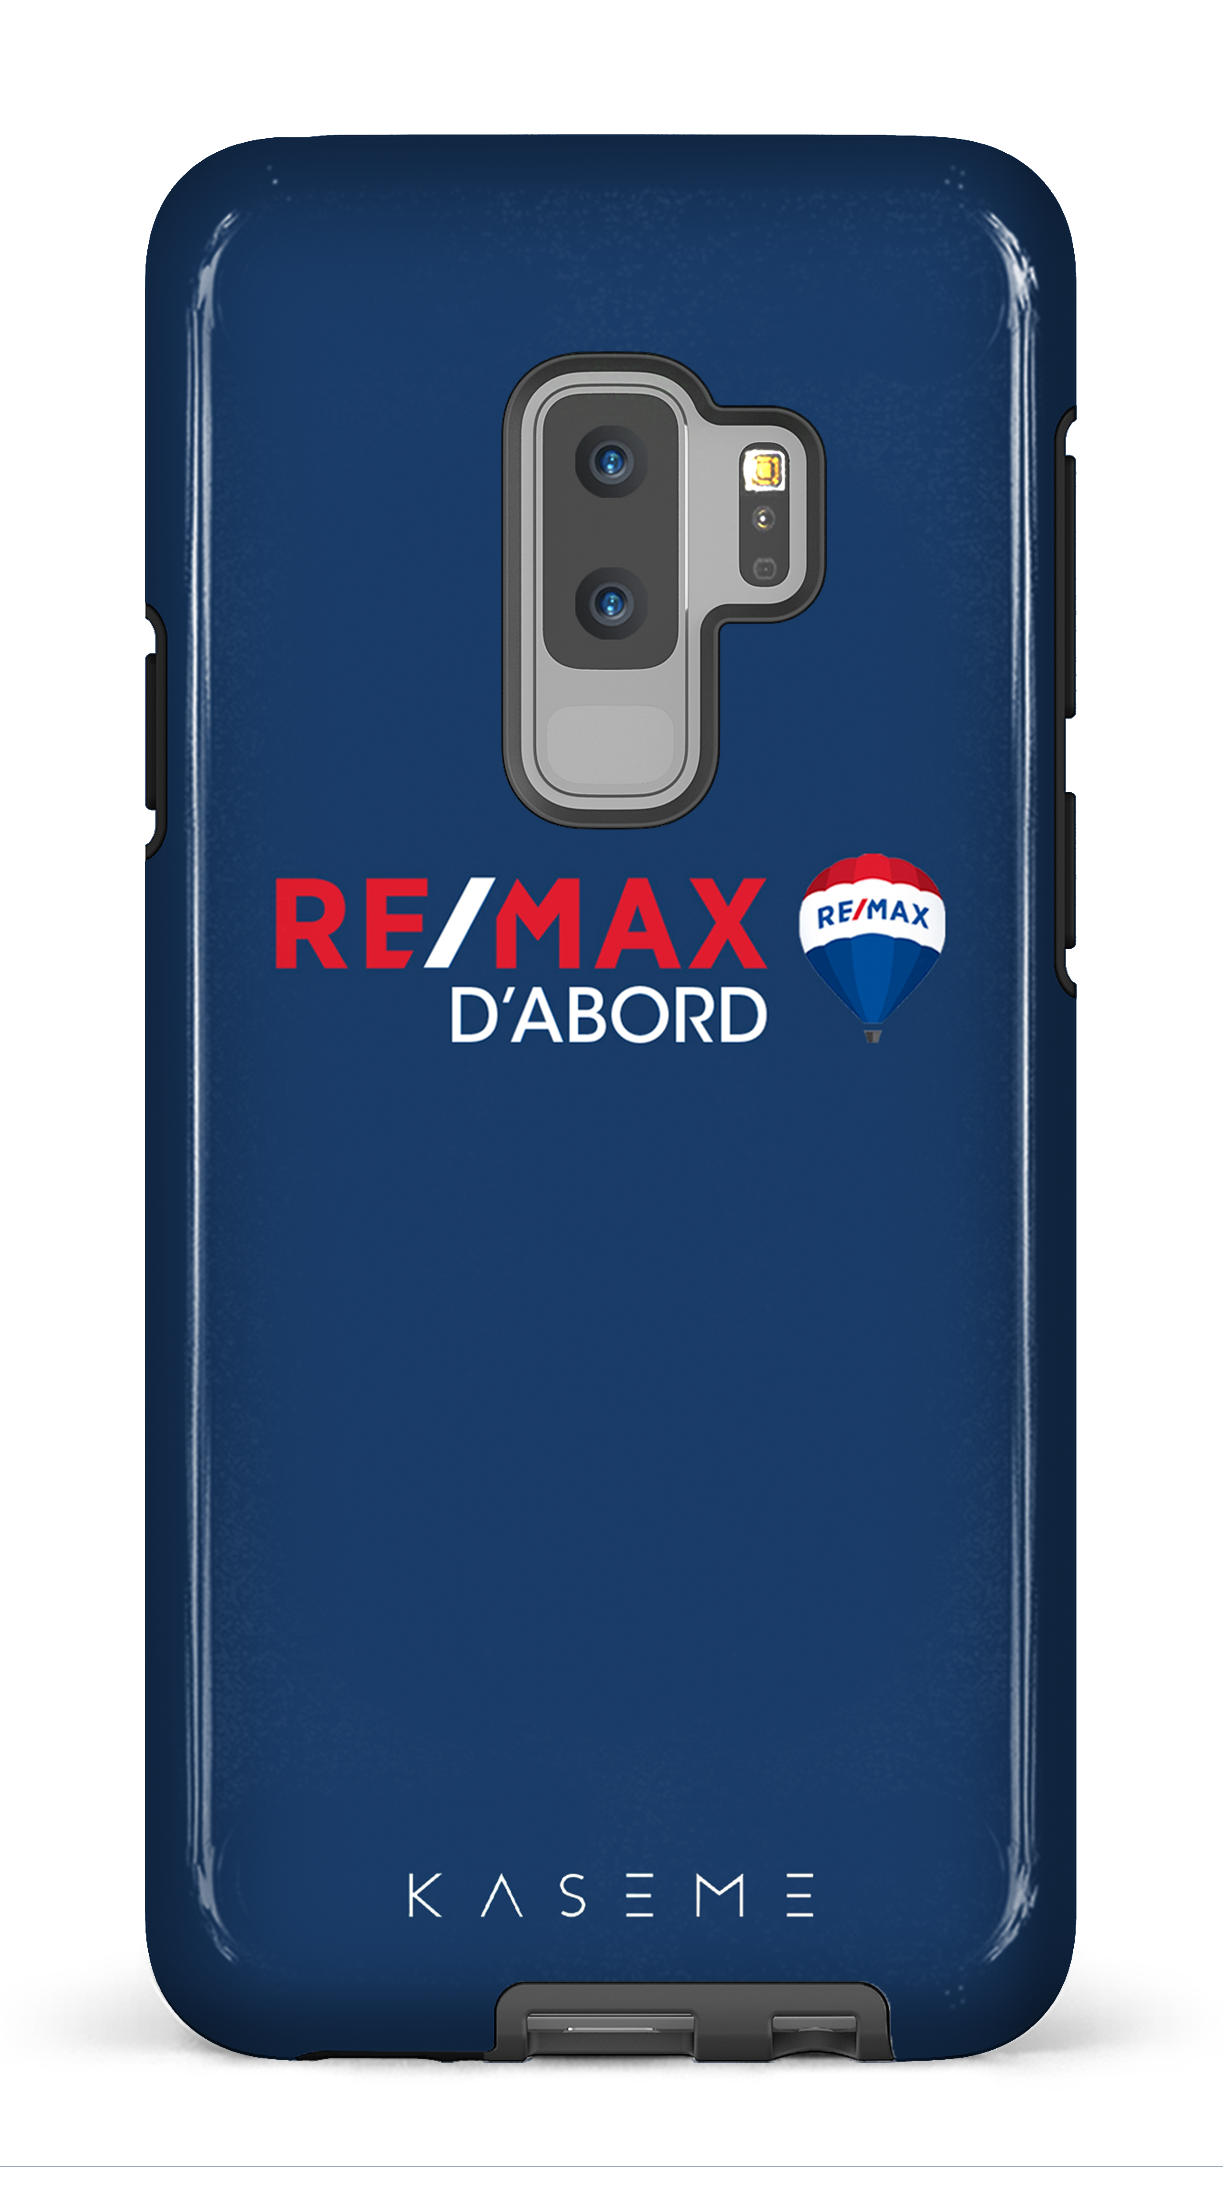 Remax D'abord Bleu - Galaxy S9 Plus